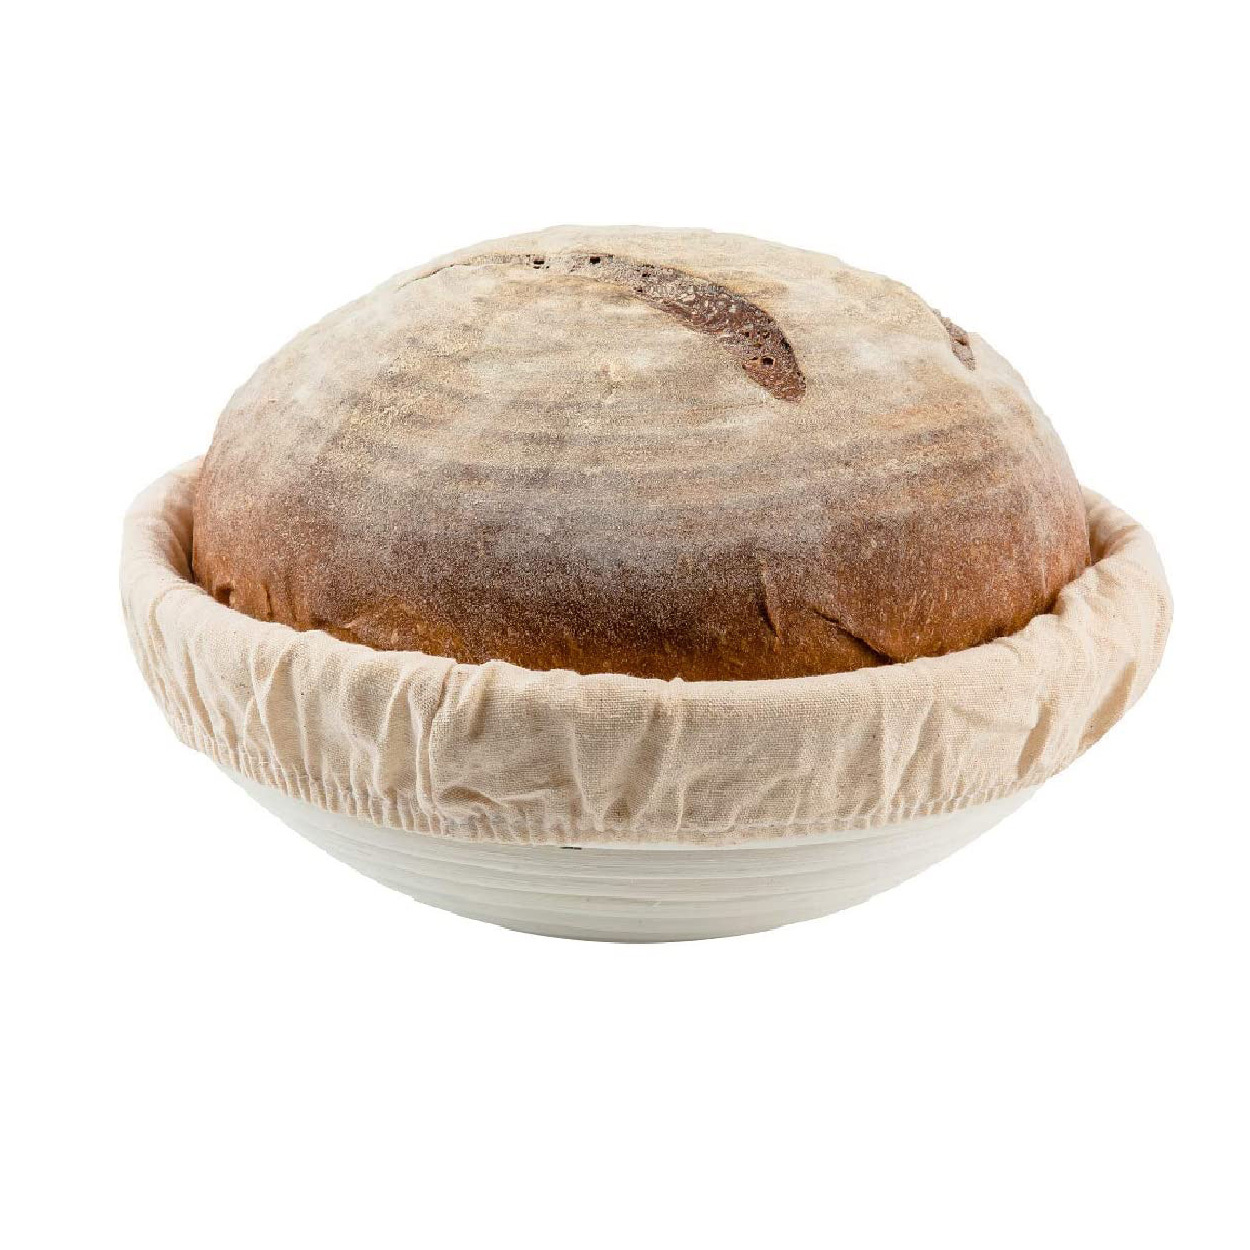 Banneton o cesto de fermentación para nuestra masa de pan casero, Recetas  de Cocina Casera